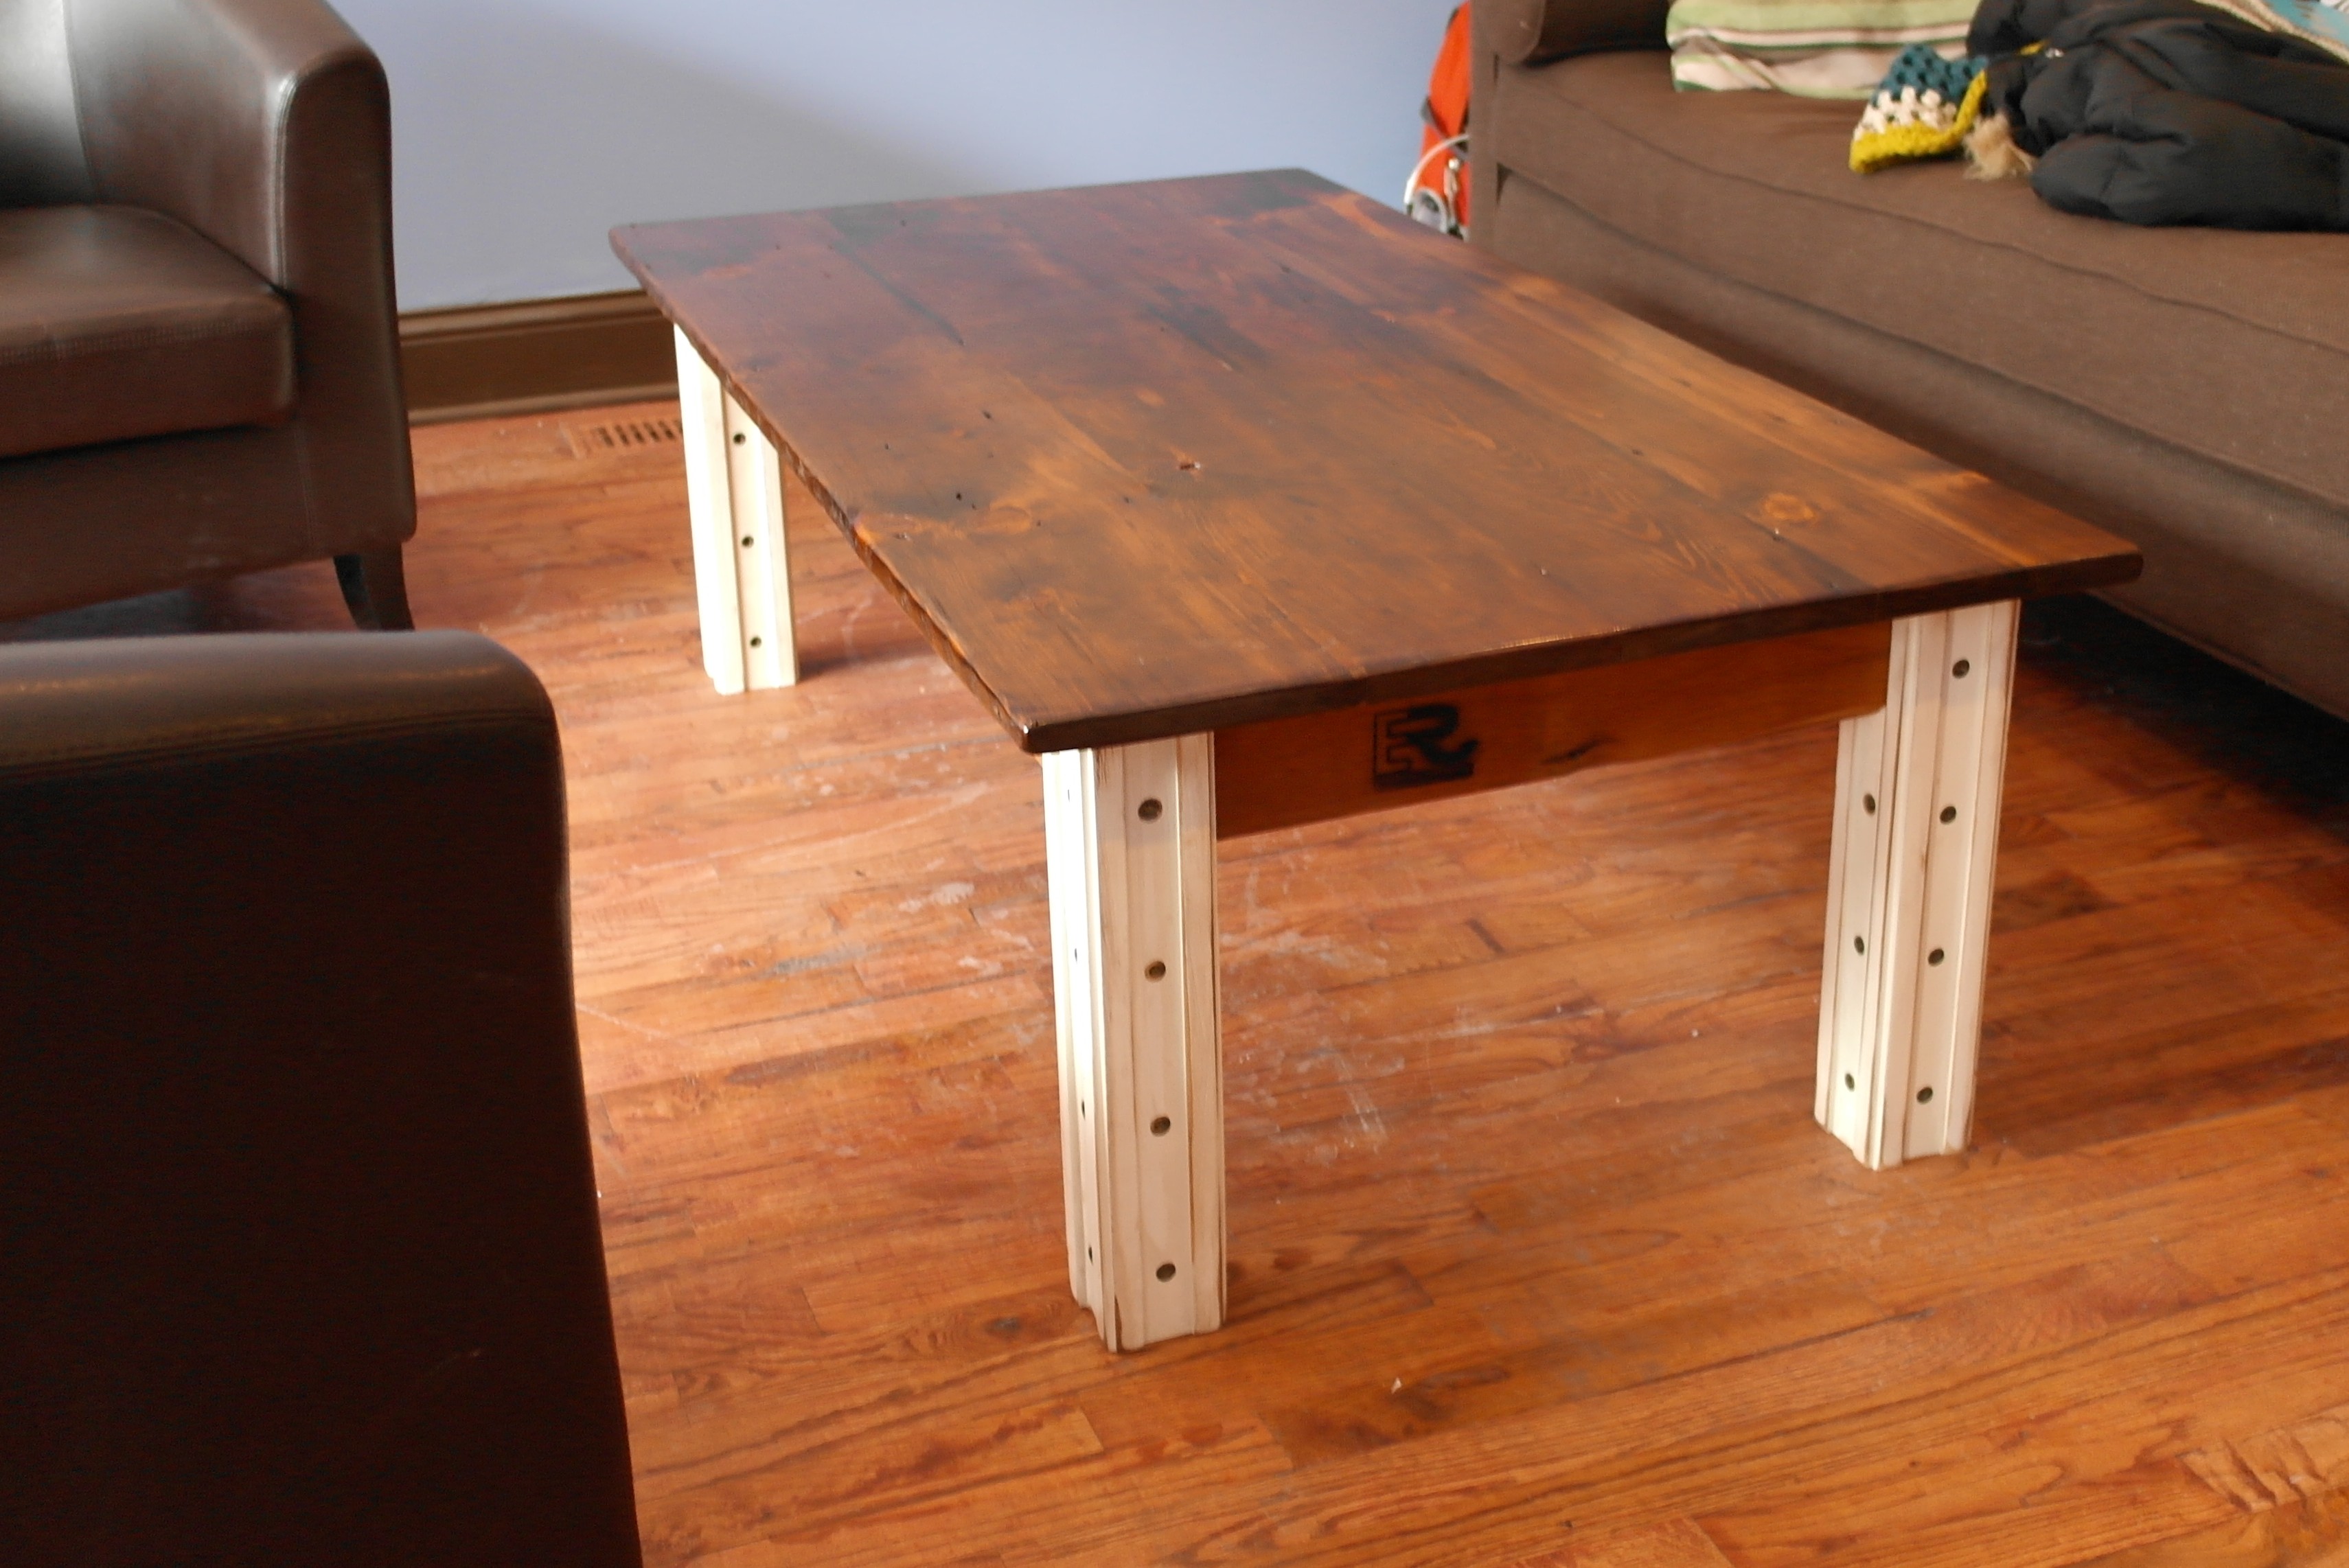 Woodworking table leg design Main Image